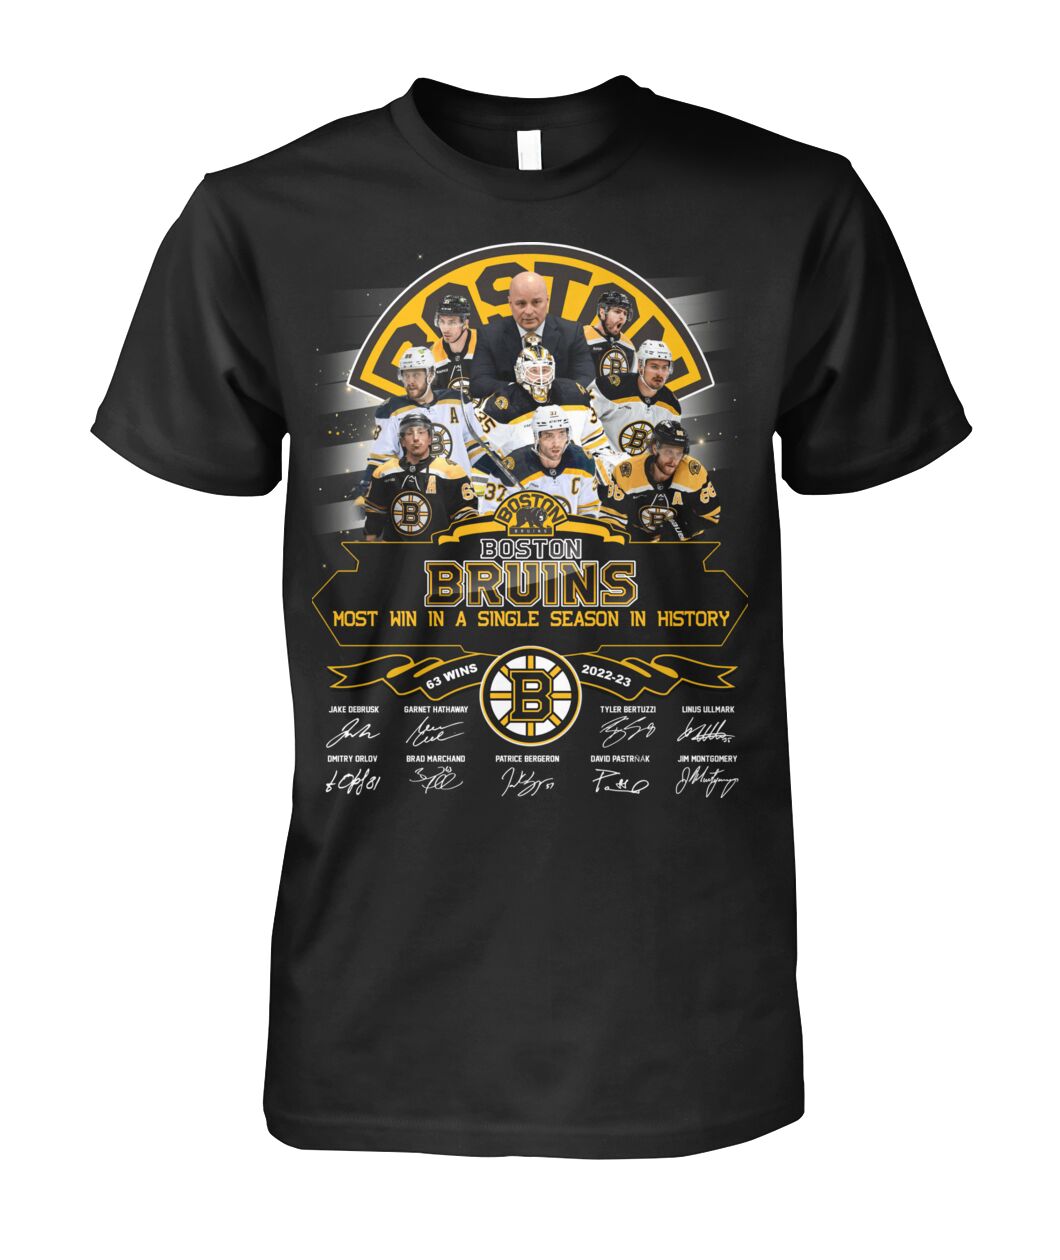 Boston Bruins Most win in a single season in history Hoodie 1